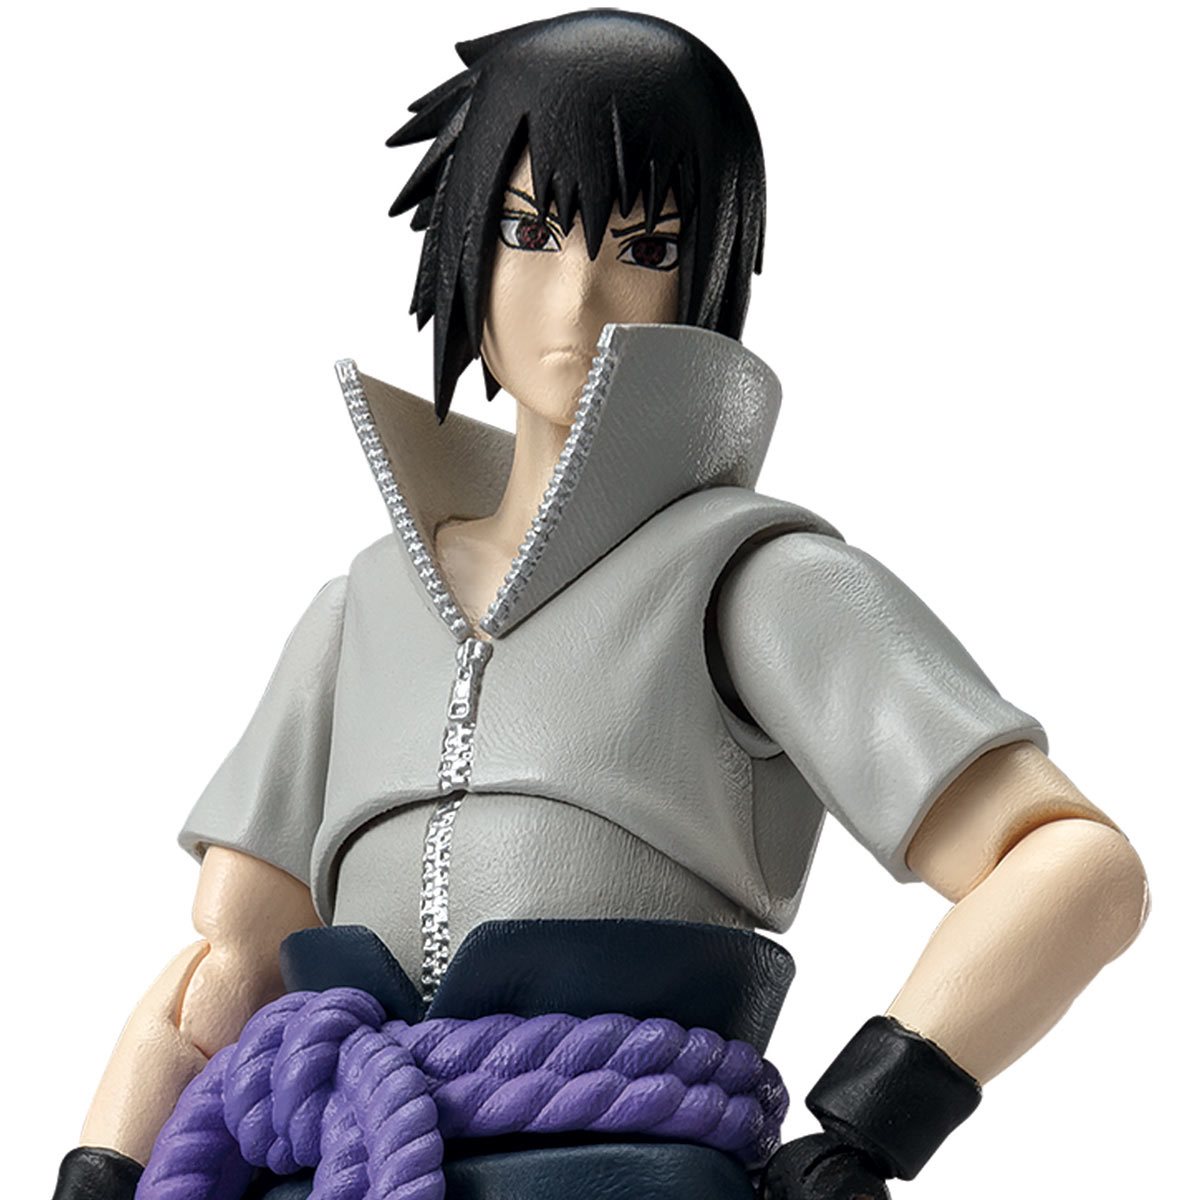 Naruto Uzumaki Figure, Sasuke Action Figure, Action Figure Toys